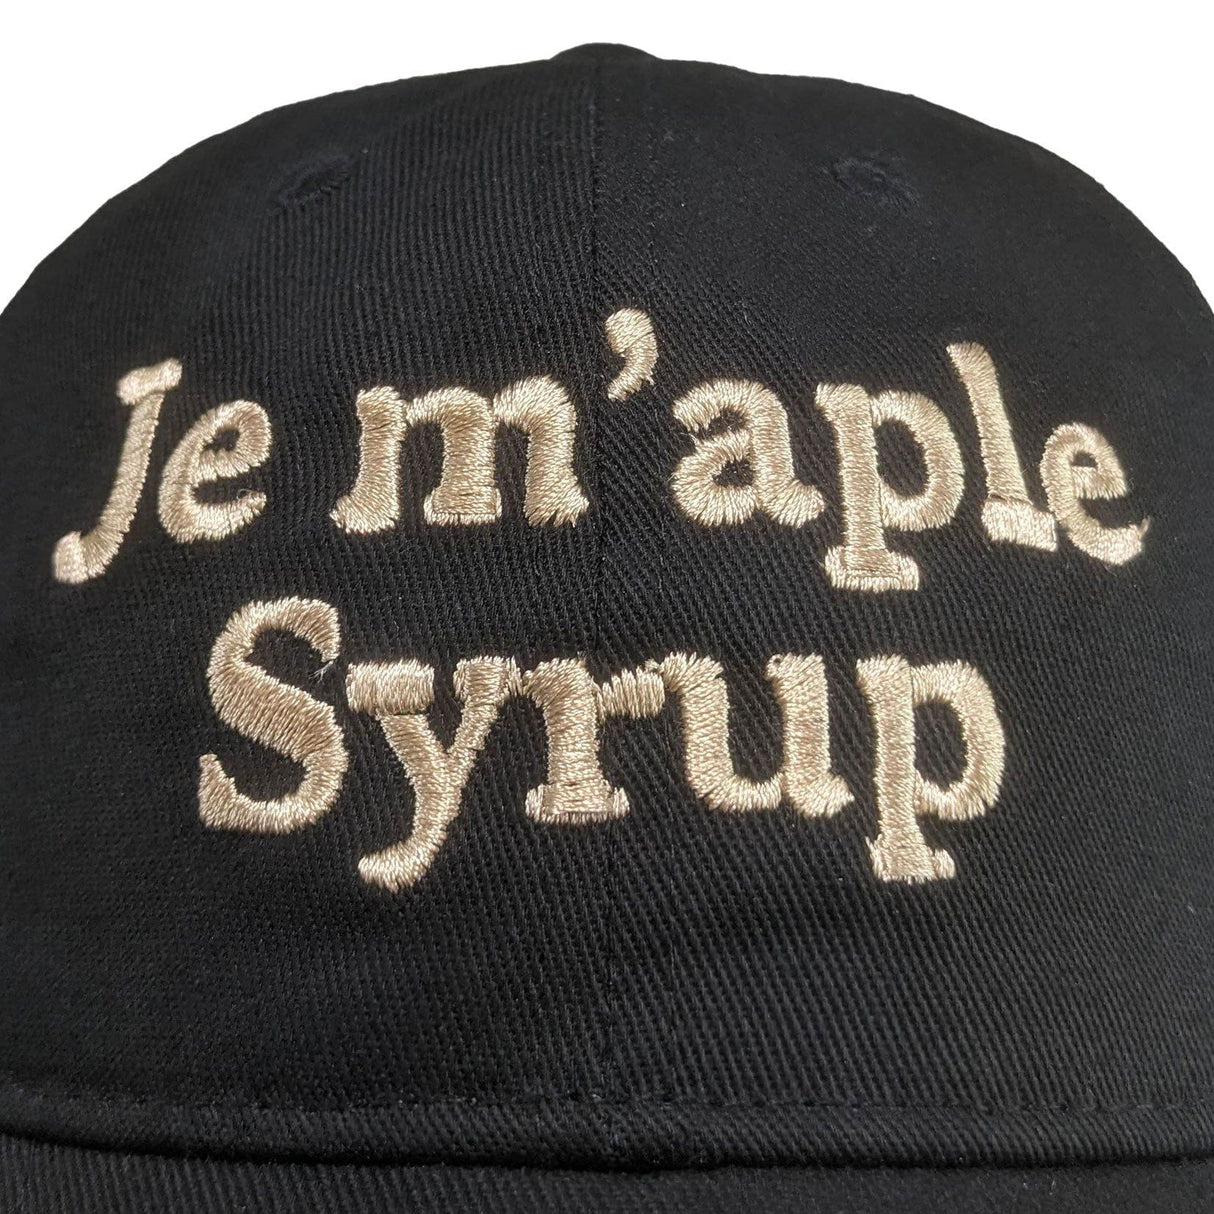 Je M'aple Syrup Dad Hat